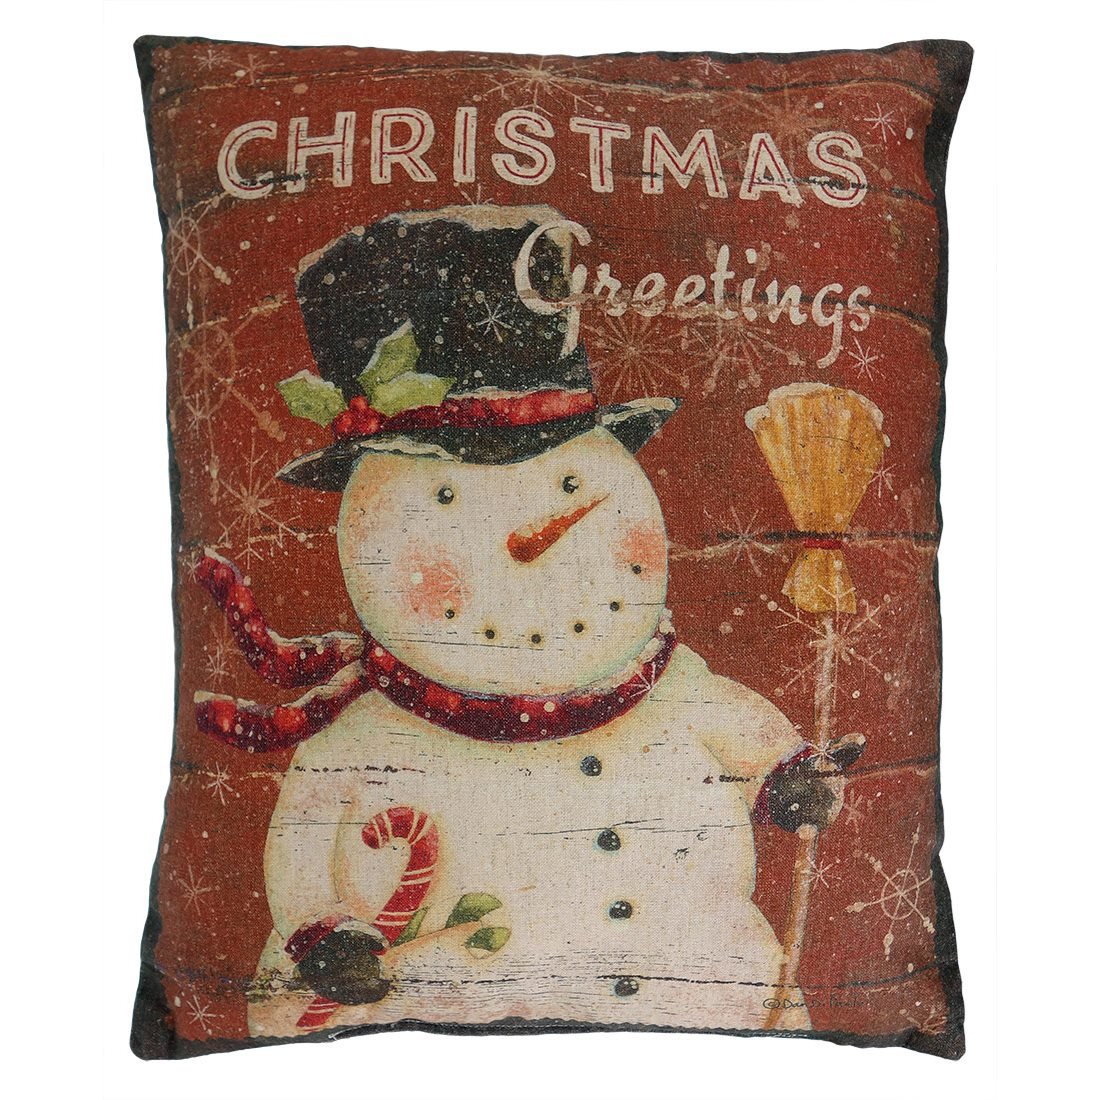 Christmas Greetings Snowman Pillow